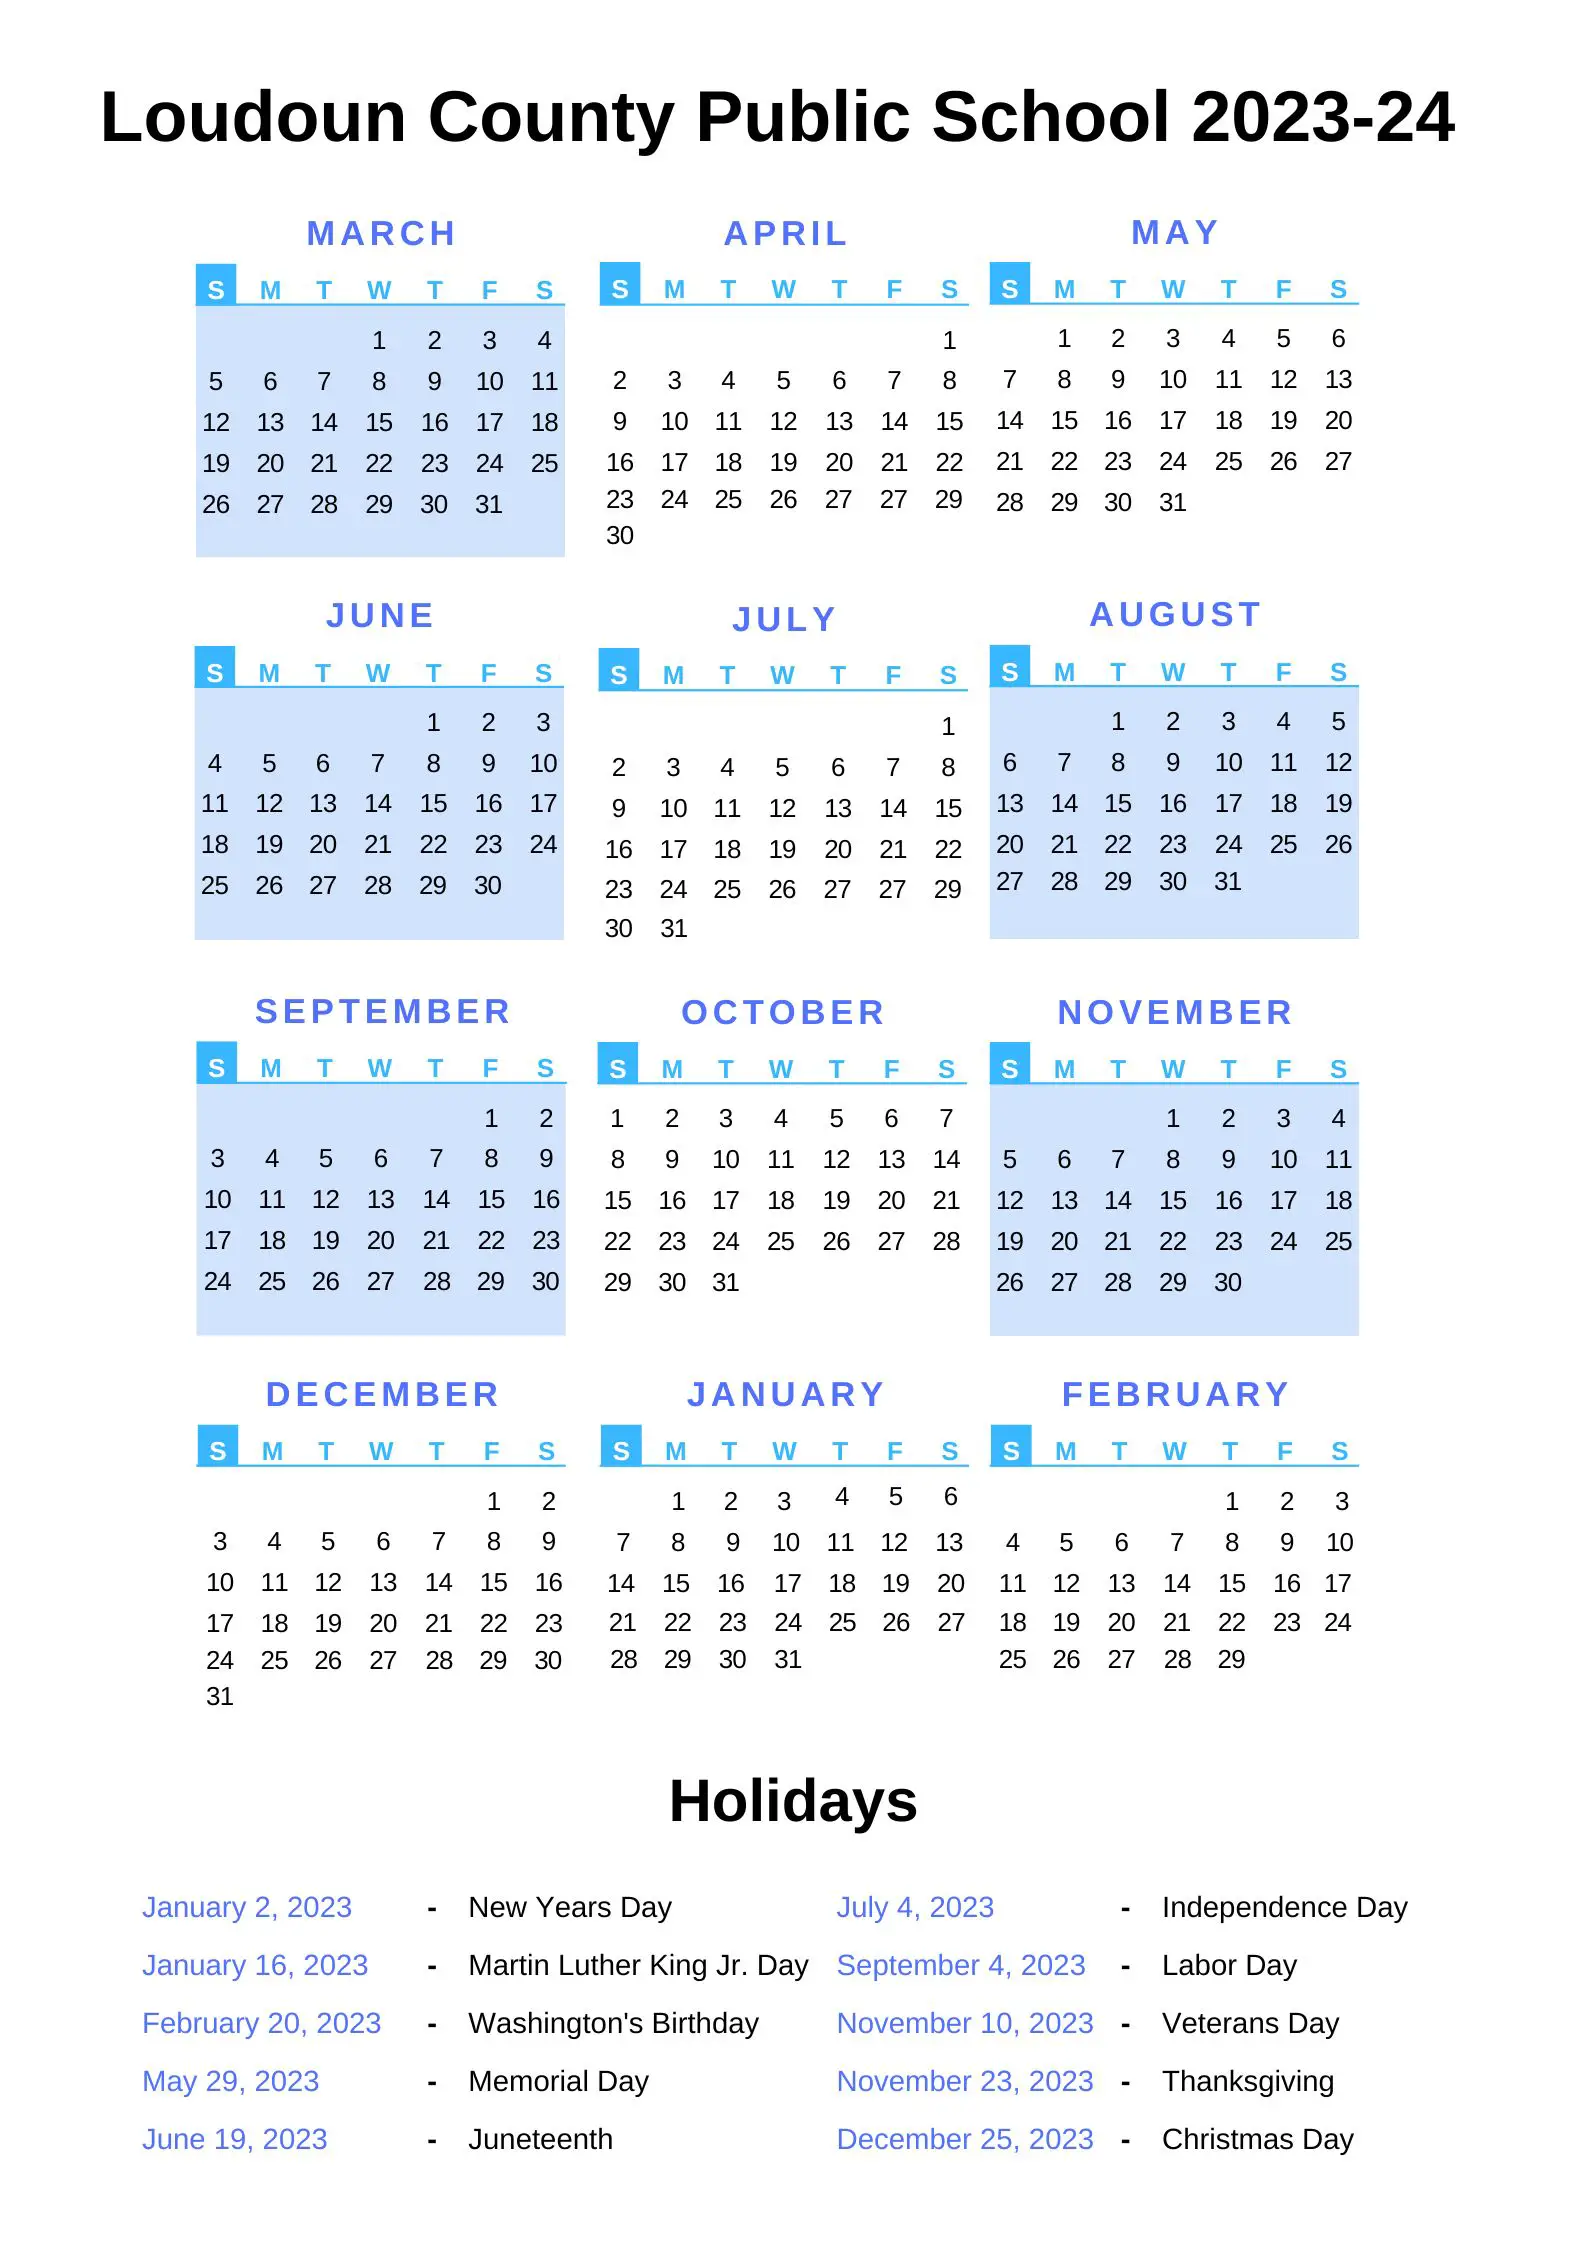 Loudoun County Public Schools Calendar [LCPS] 202324